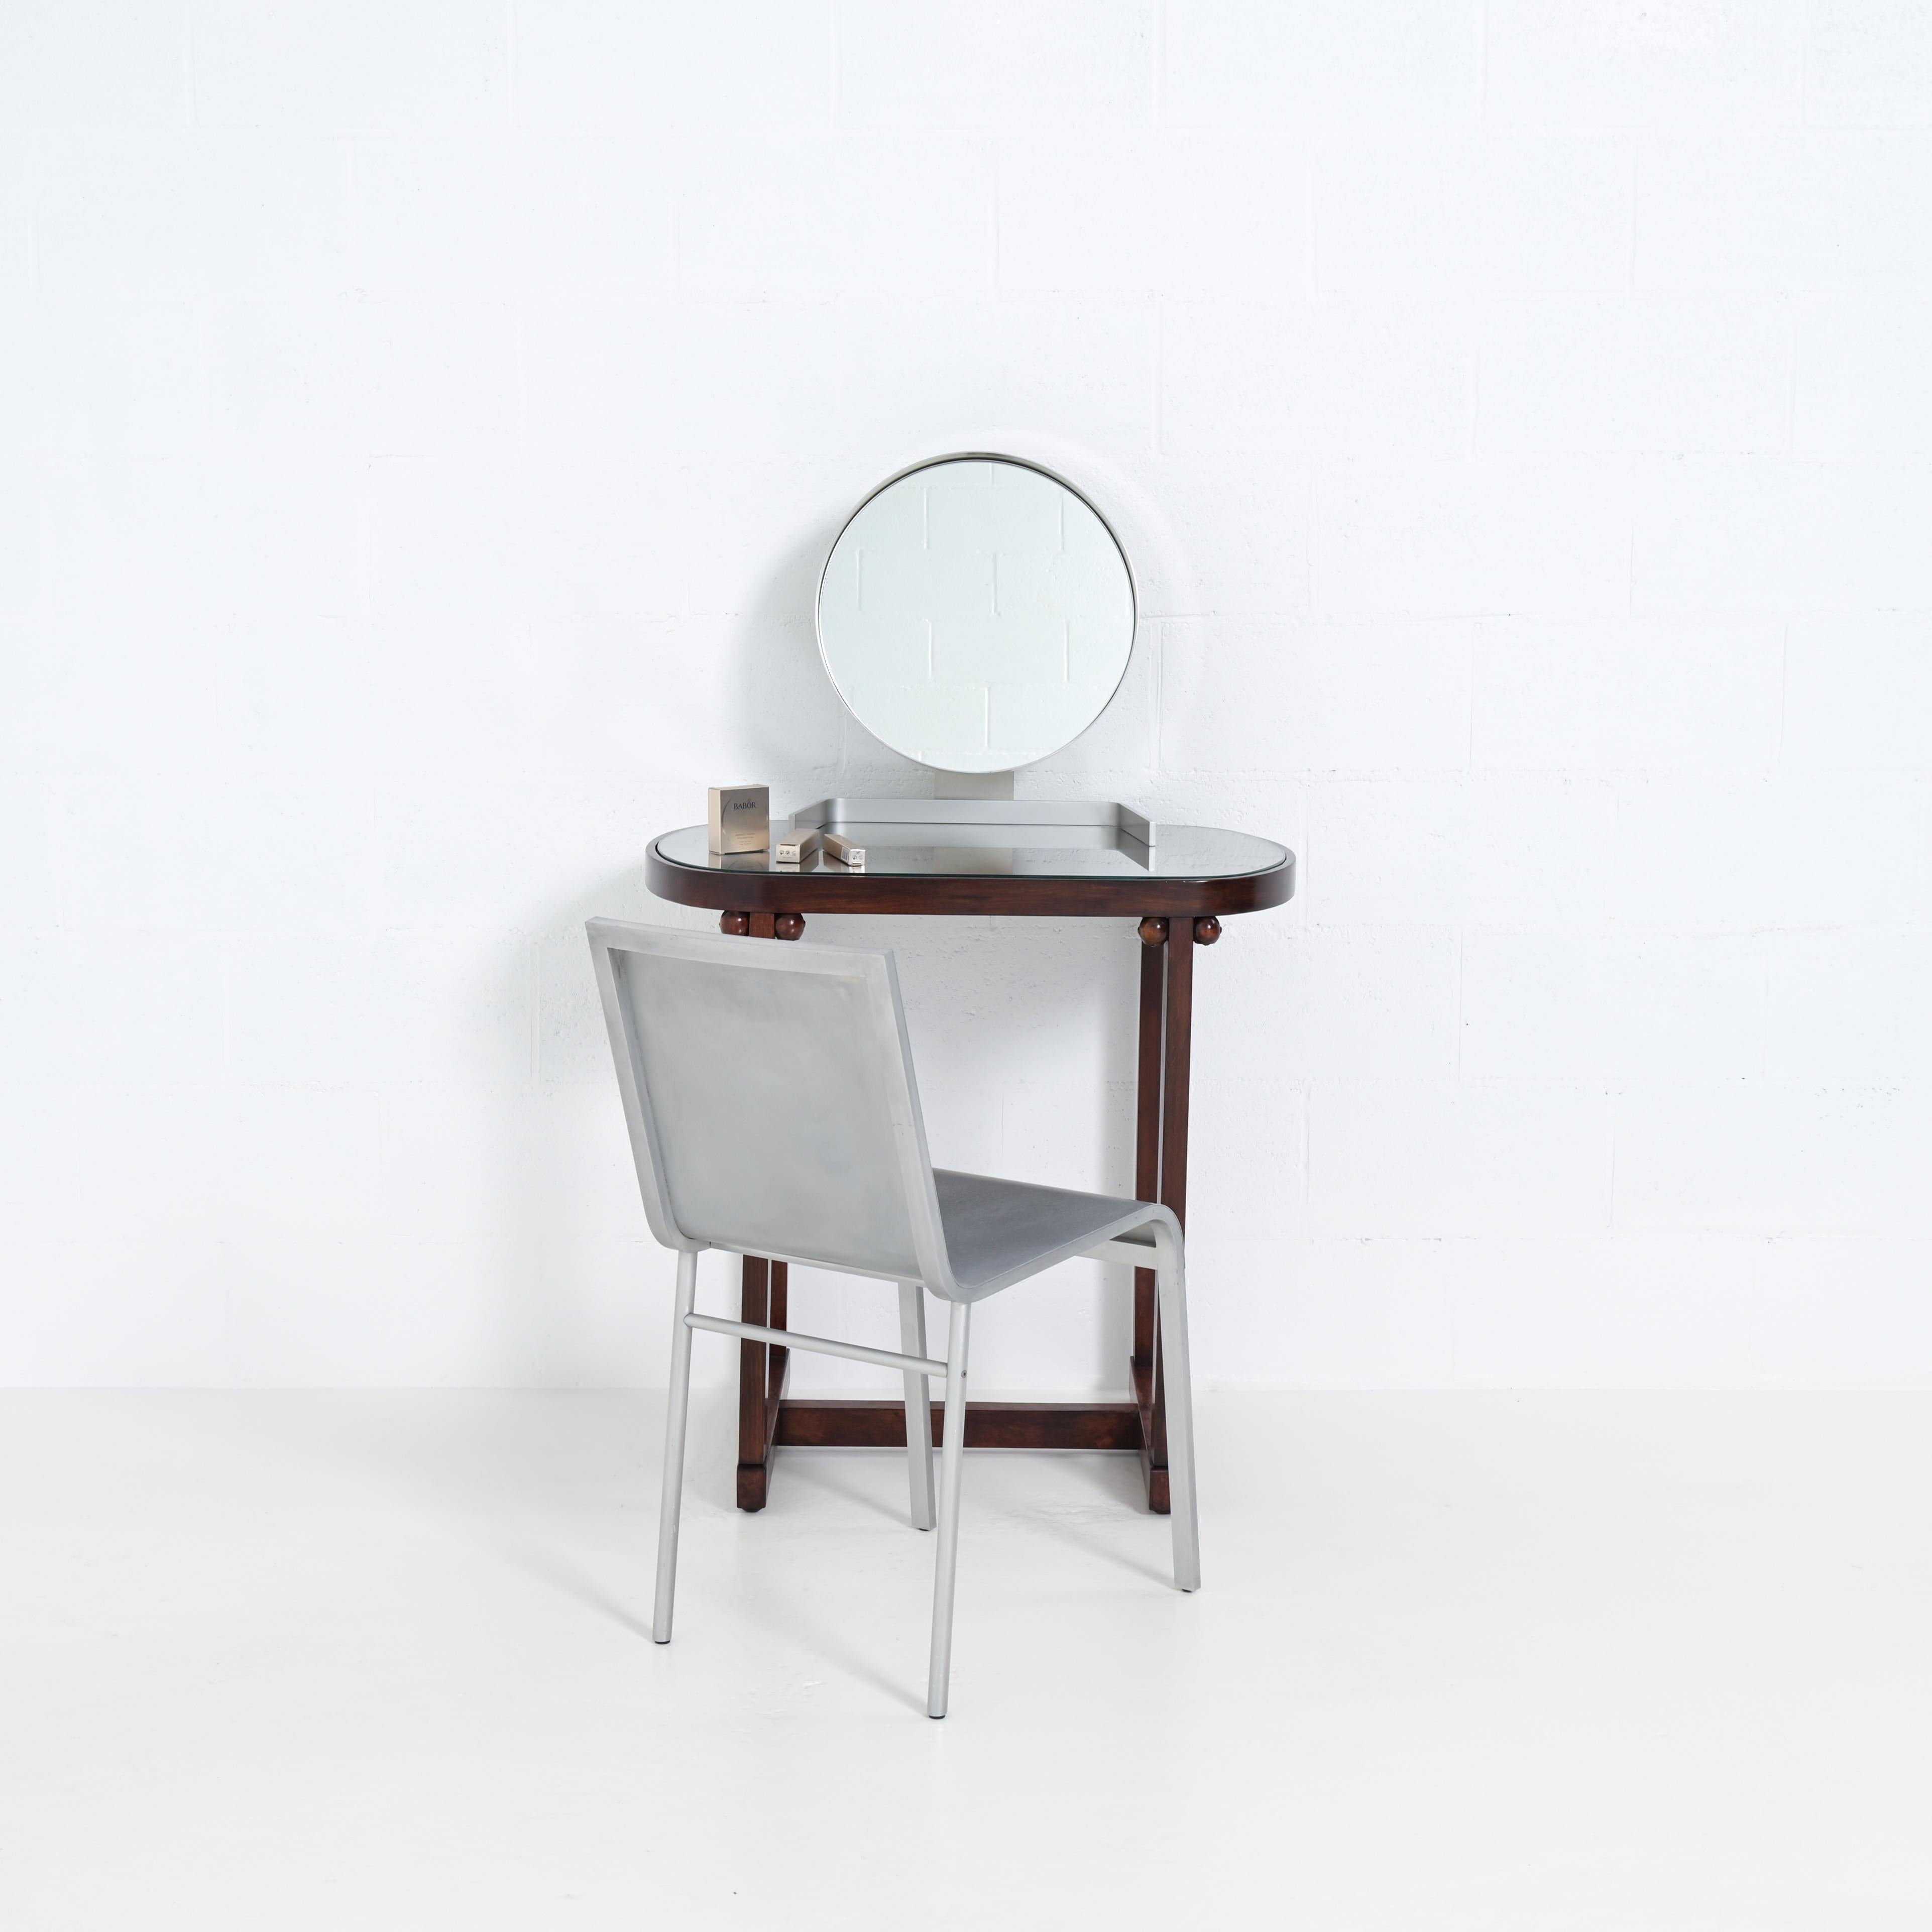 Josef Hoffmann vanity table by J. & J. Kohn In Good Condition For Sale In Vlimmeren, BE